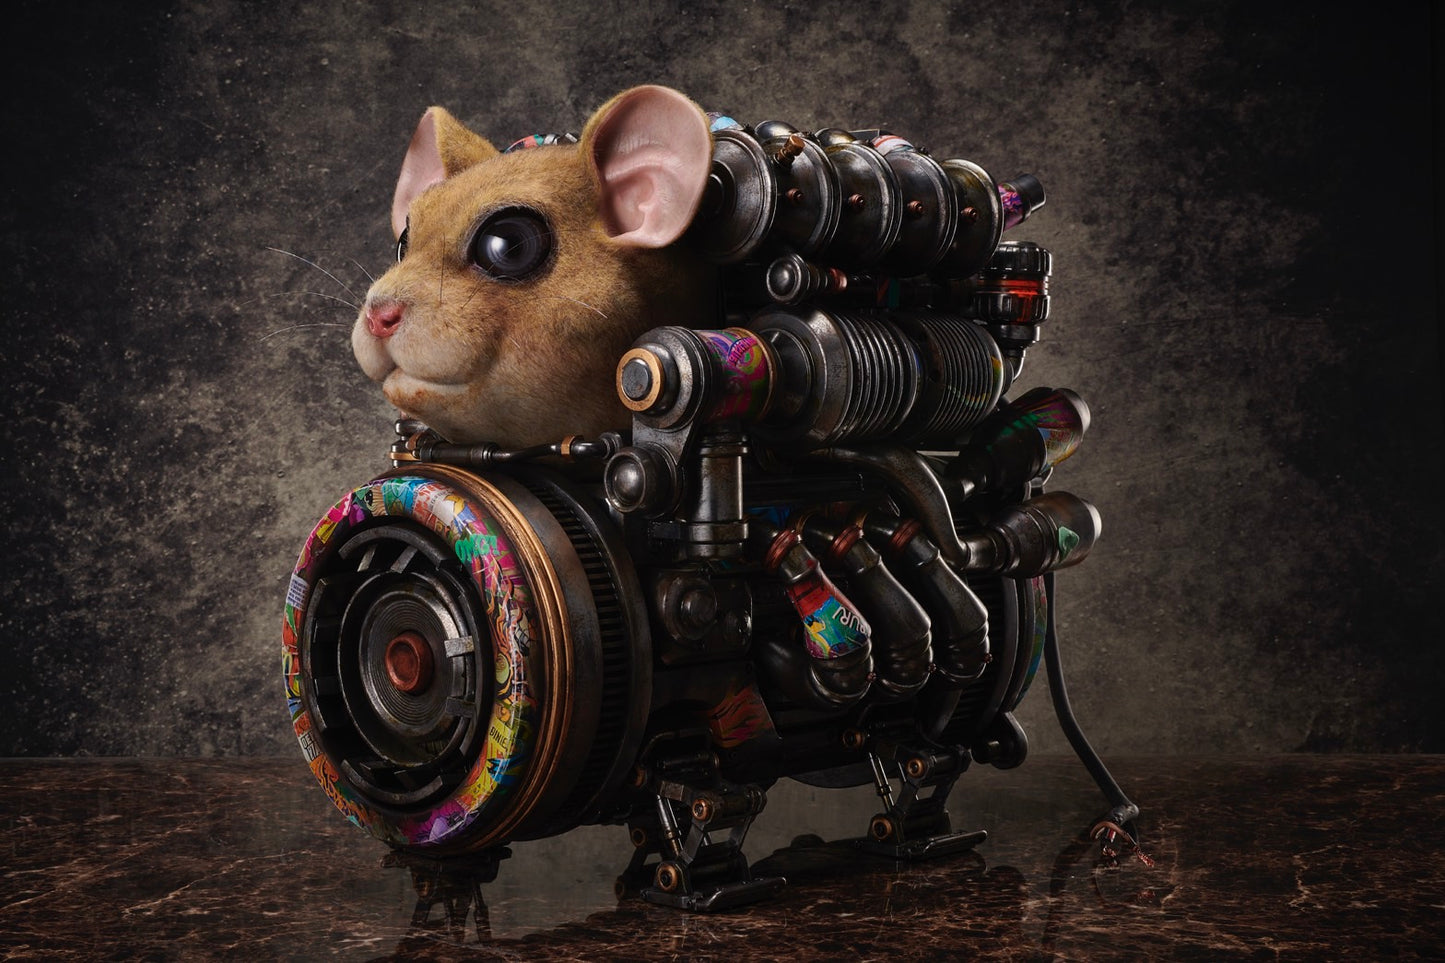 Rat Engine: I